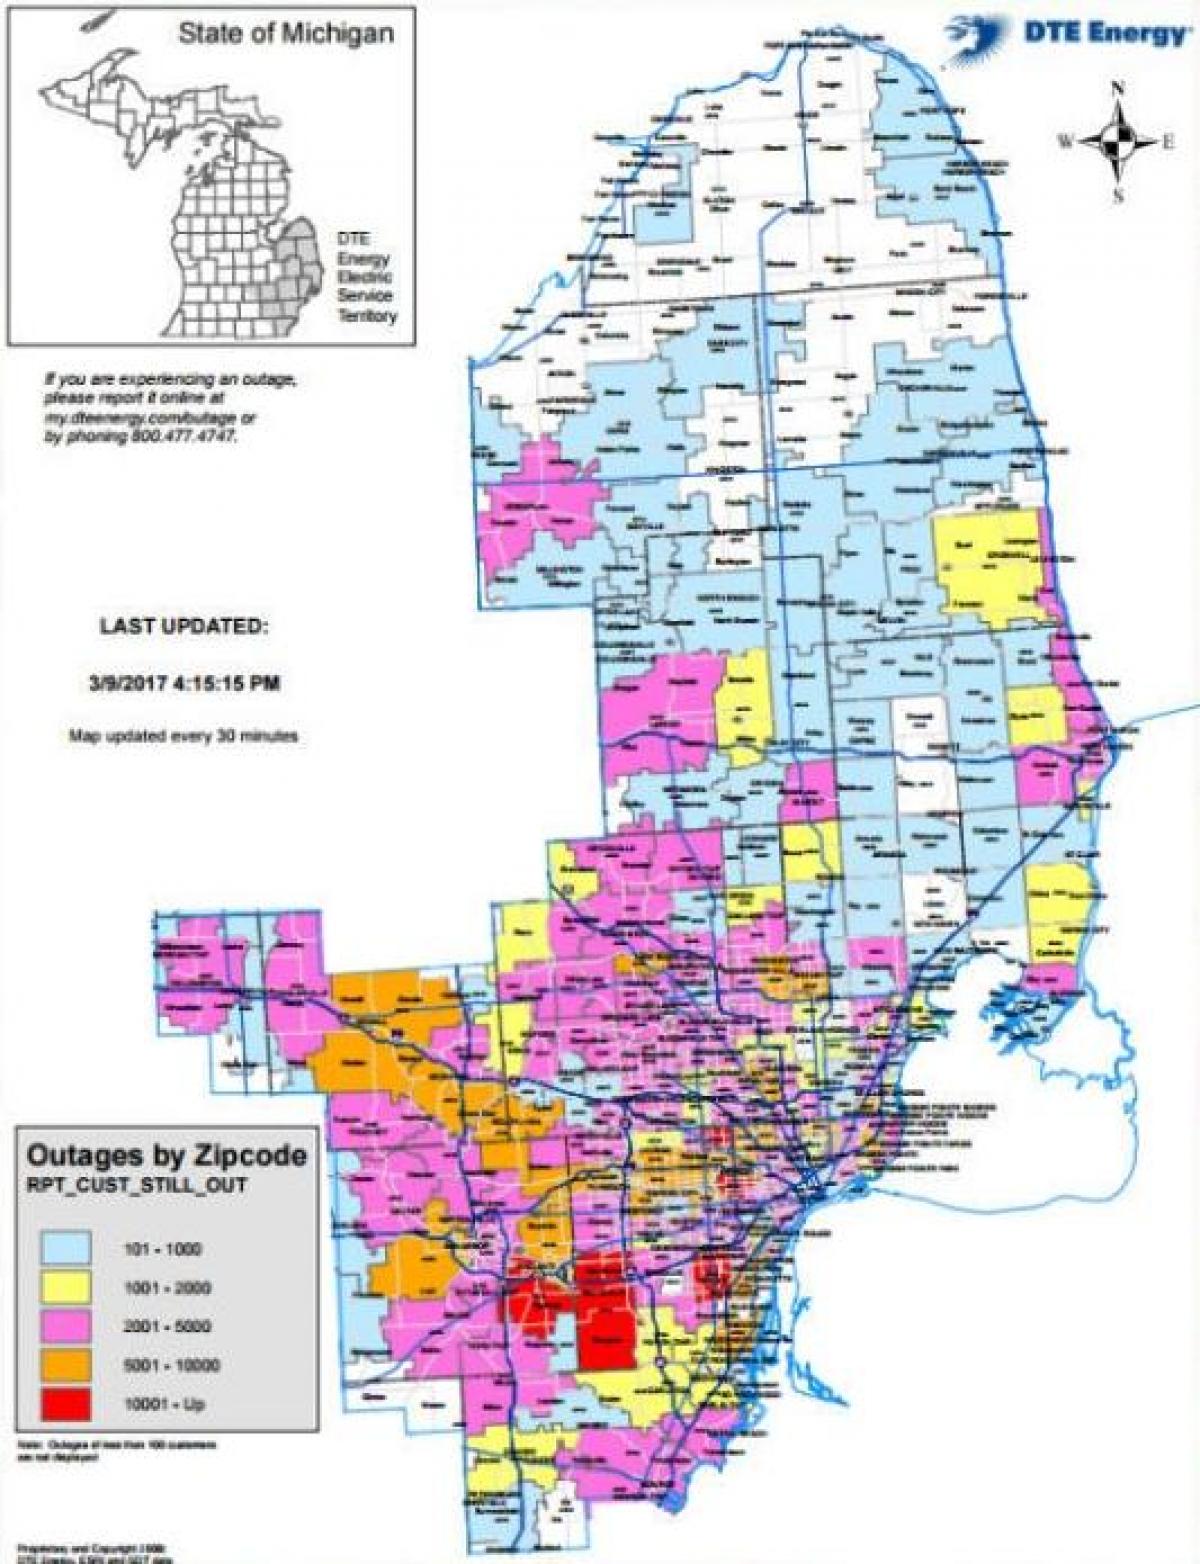 Detroit edison poder de tall mapa